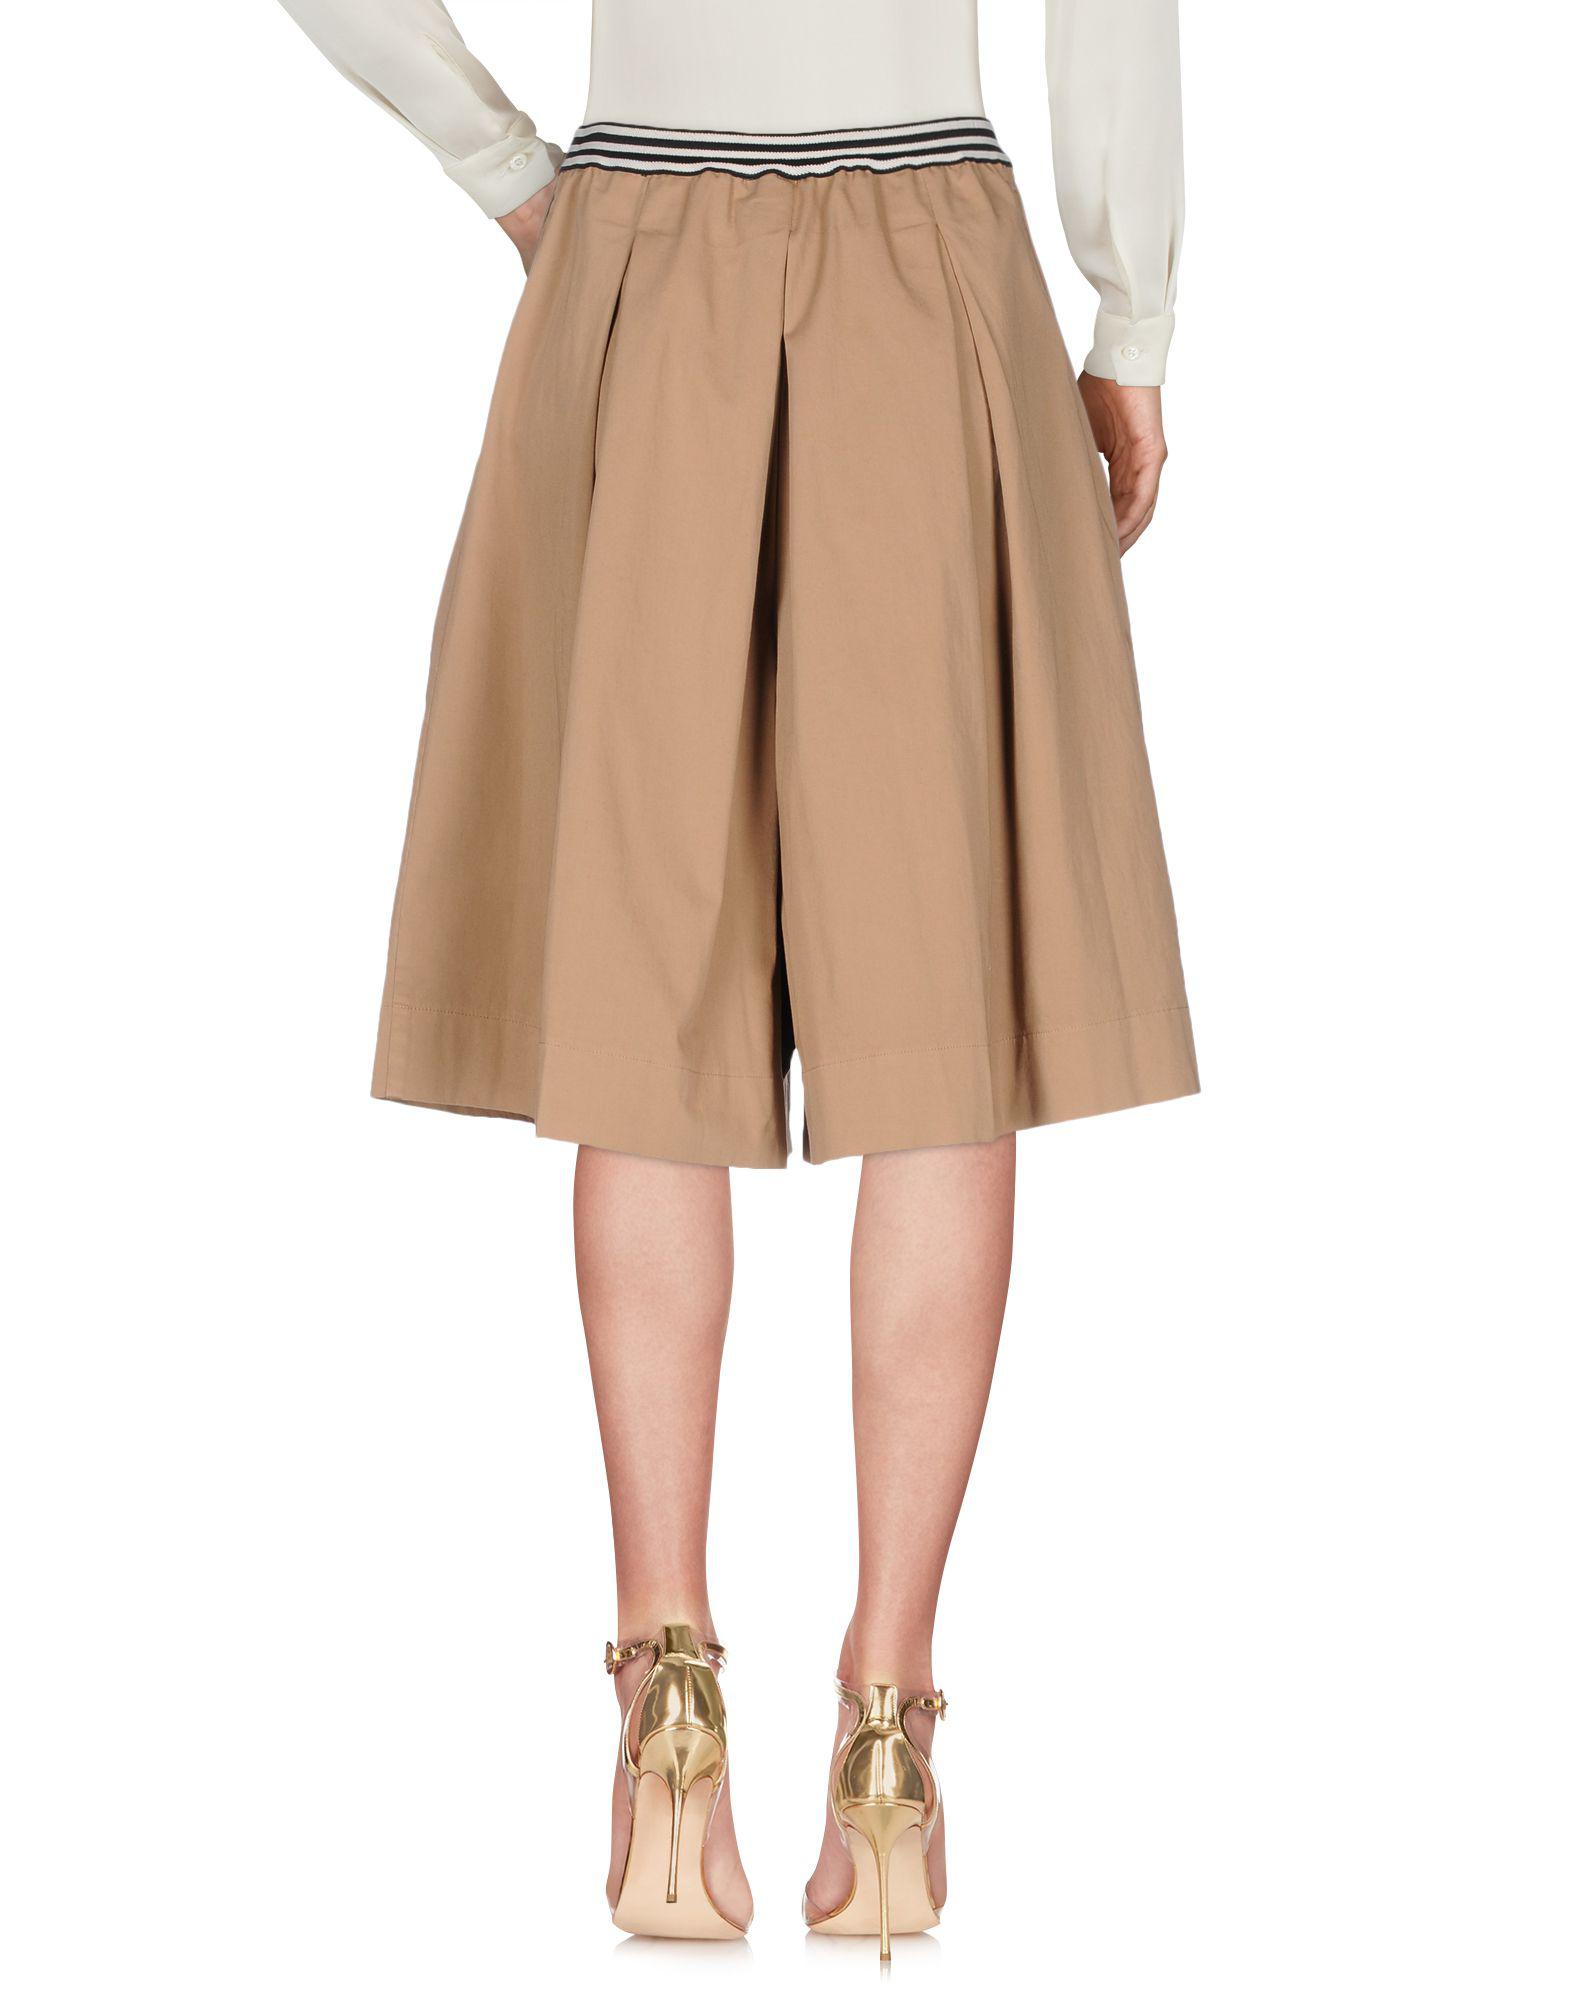 Department 5 Cotton Knee Length Skirt in Khaki (Natural) - Lyst